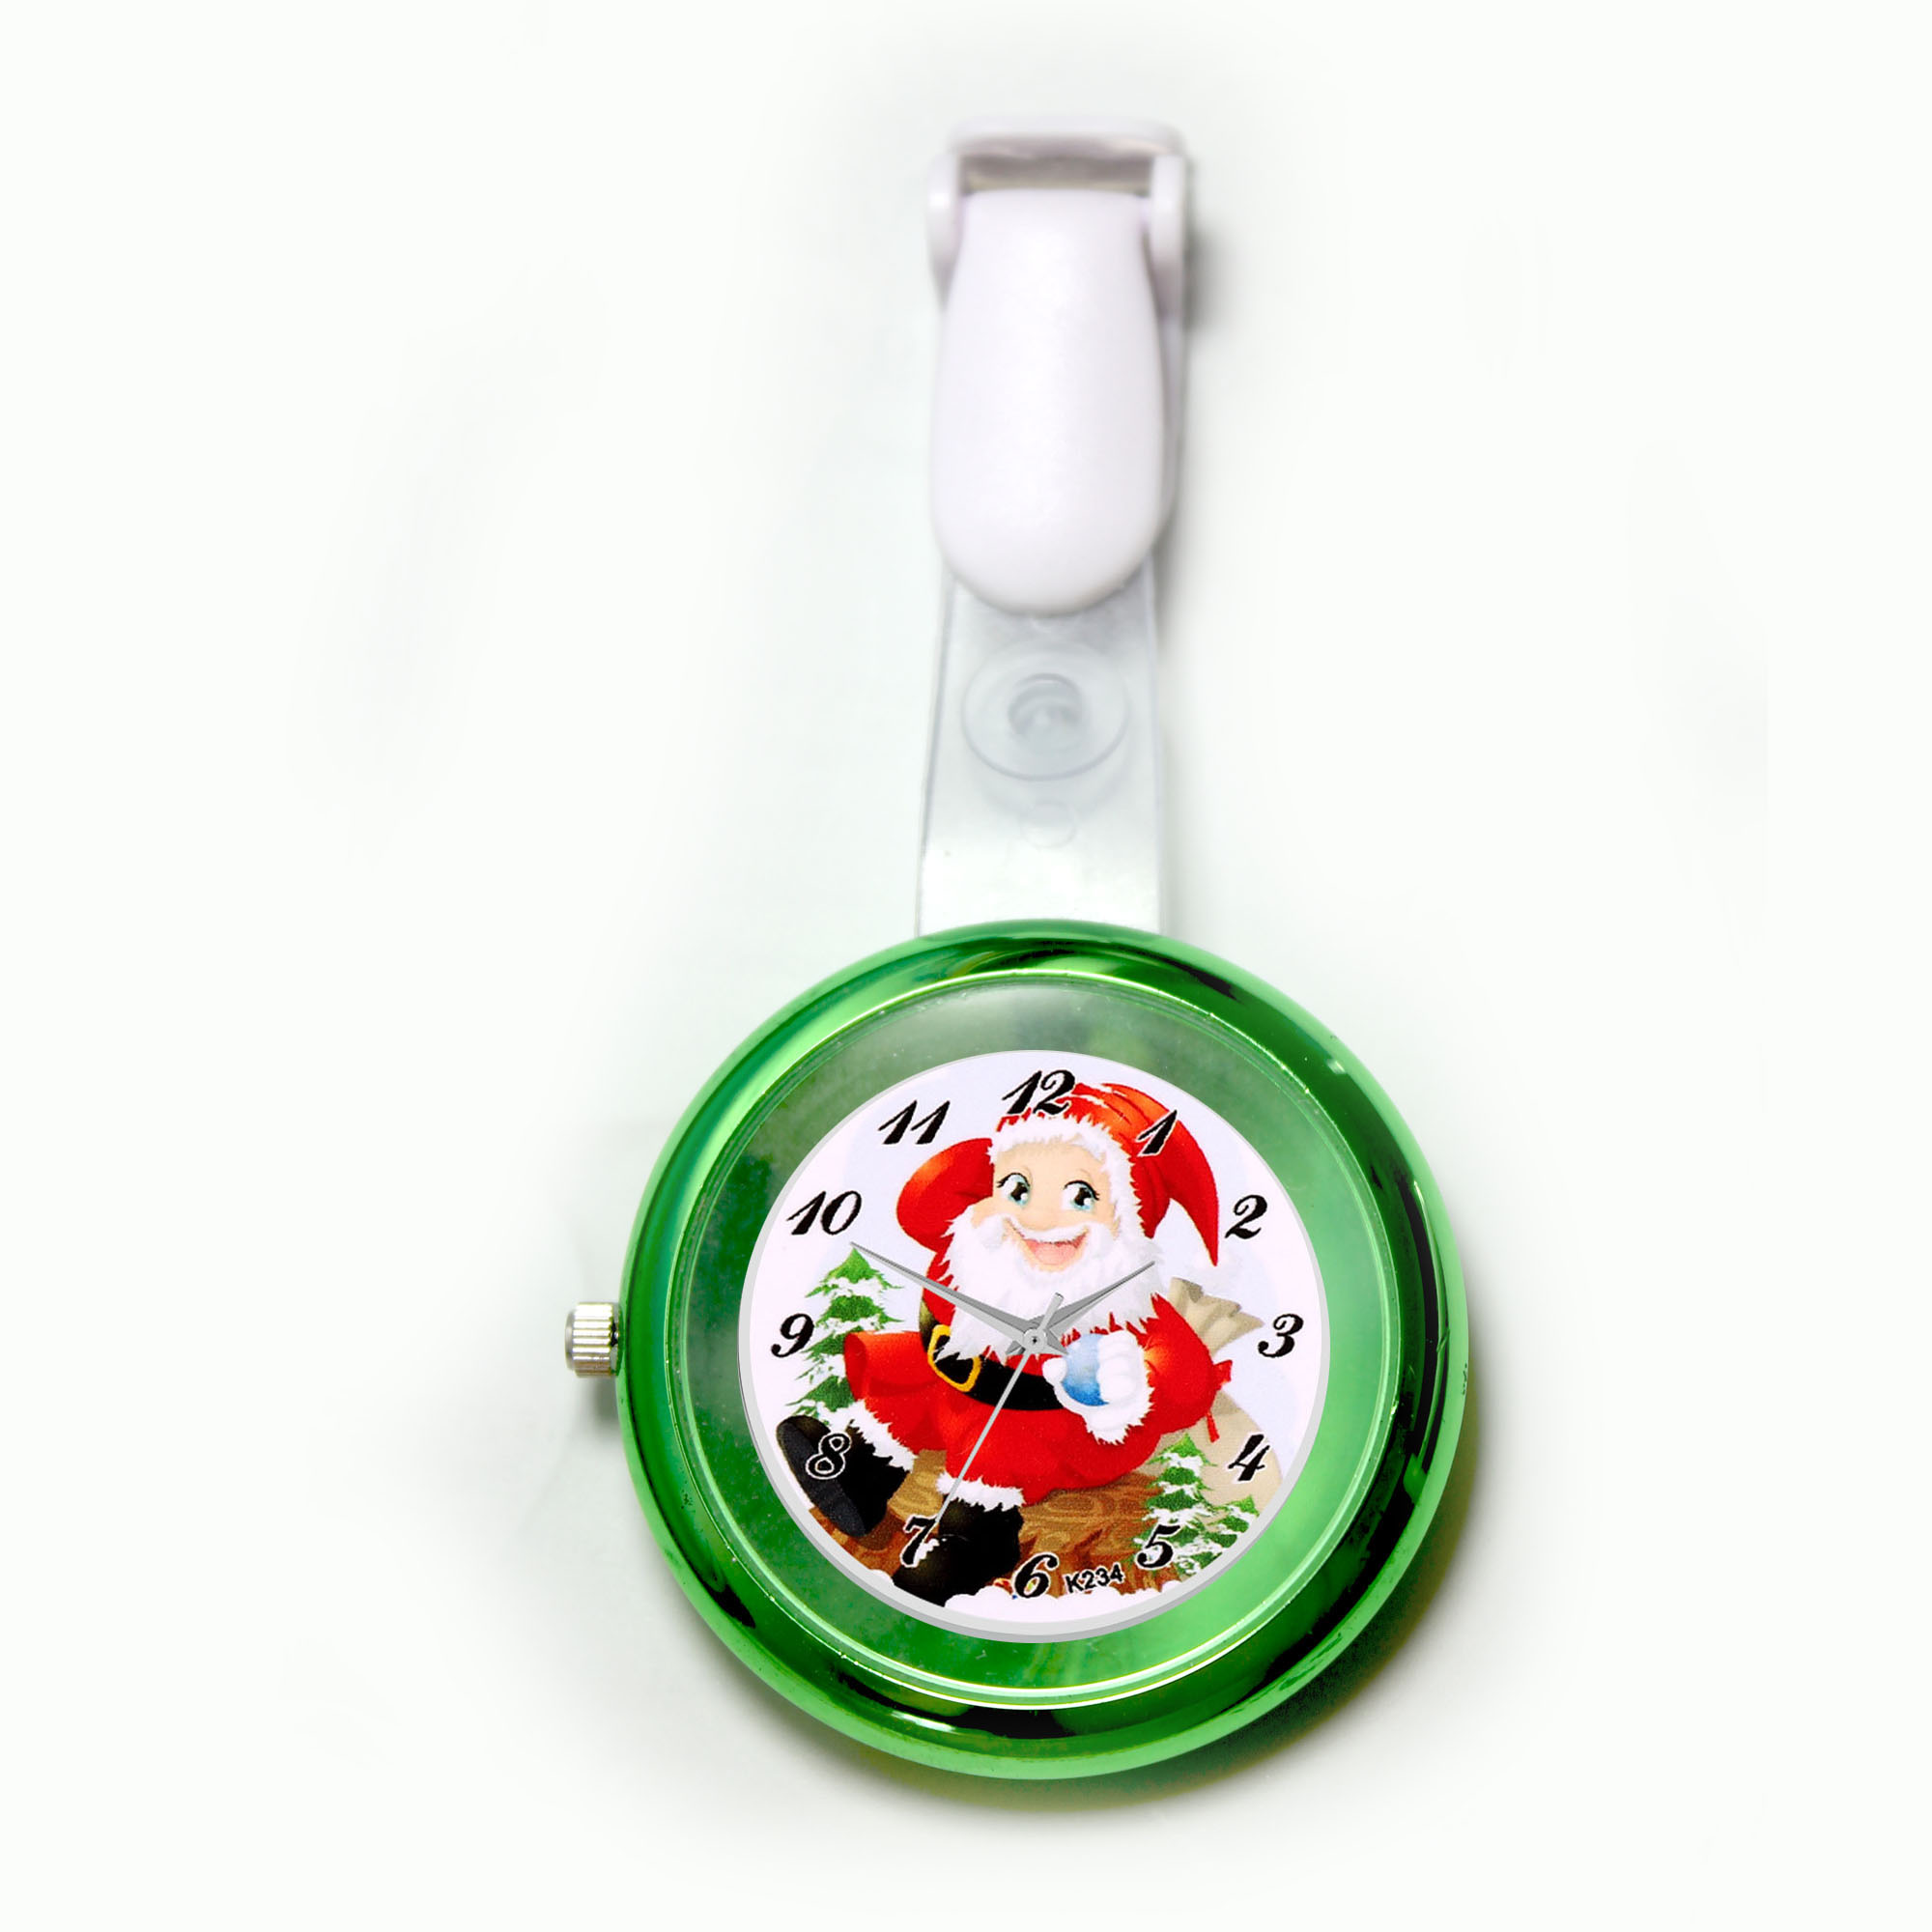  Colored Nurse Clock NS2103 - Christmas theme 